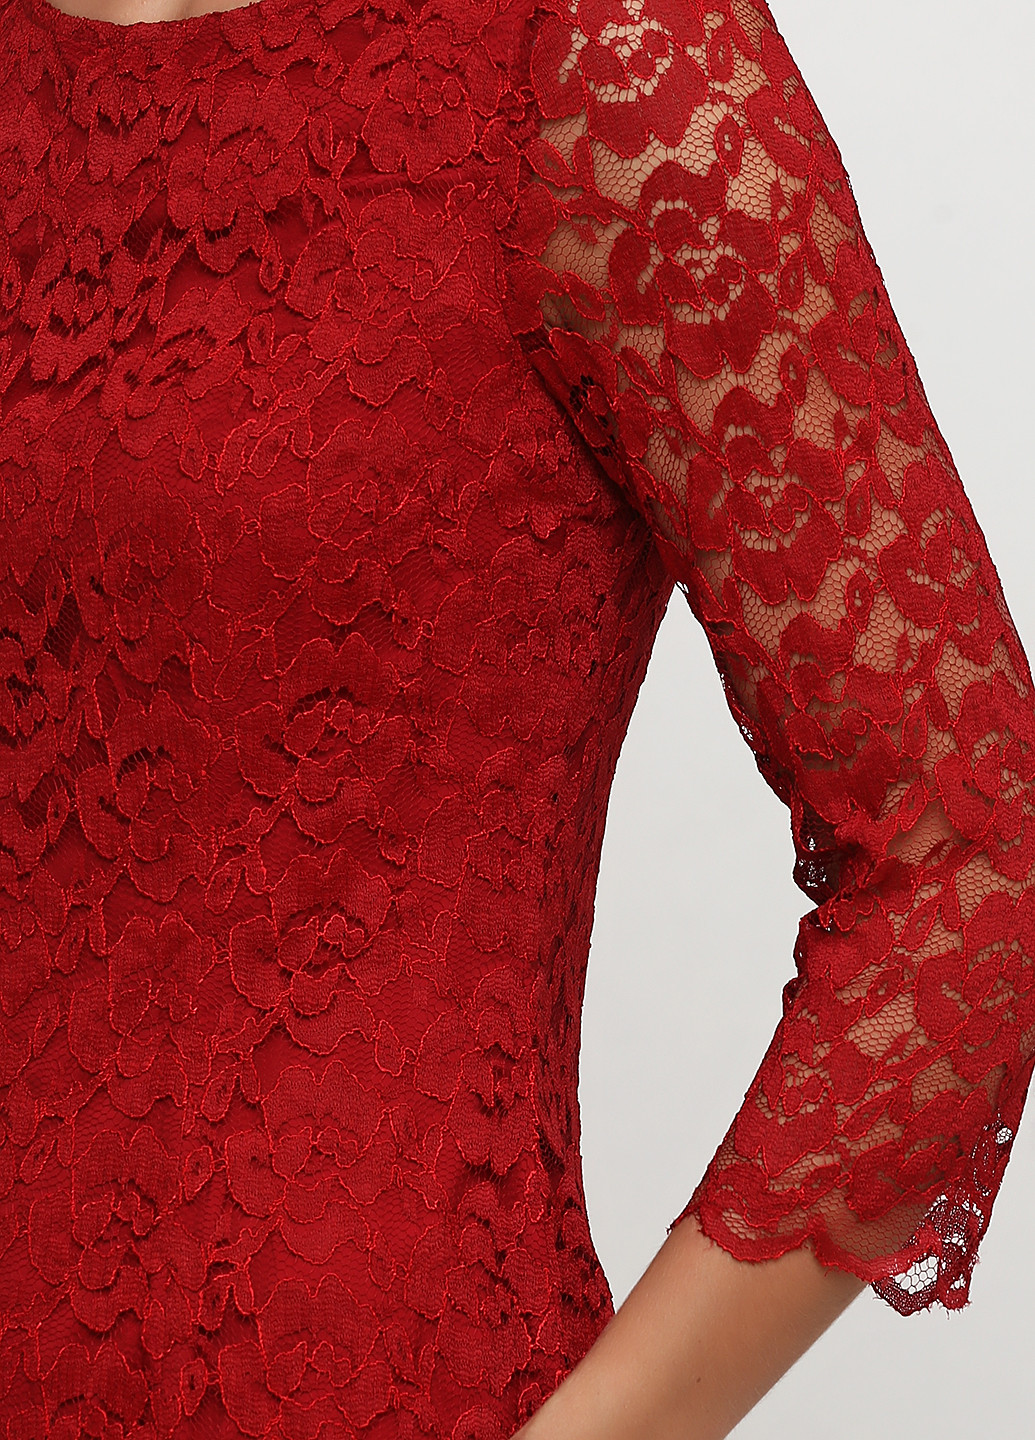 Темно-красное коктейльное платье футляр Patrizia Dini однотонное